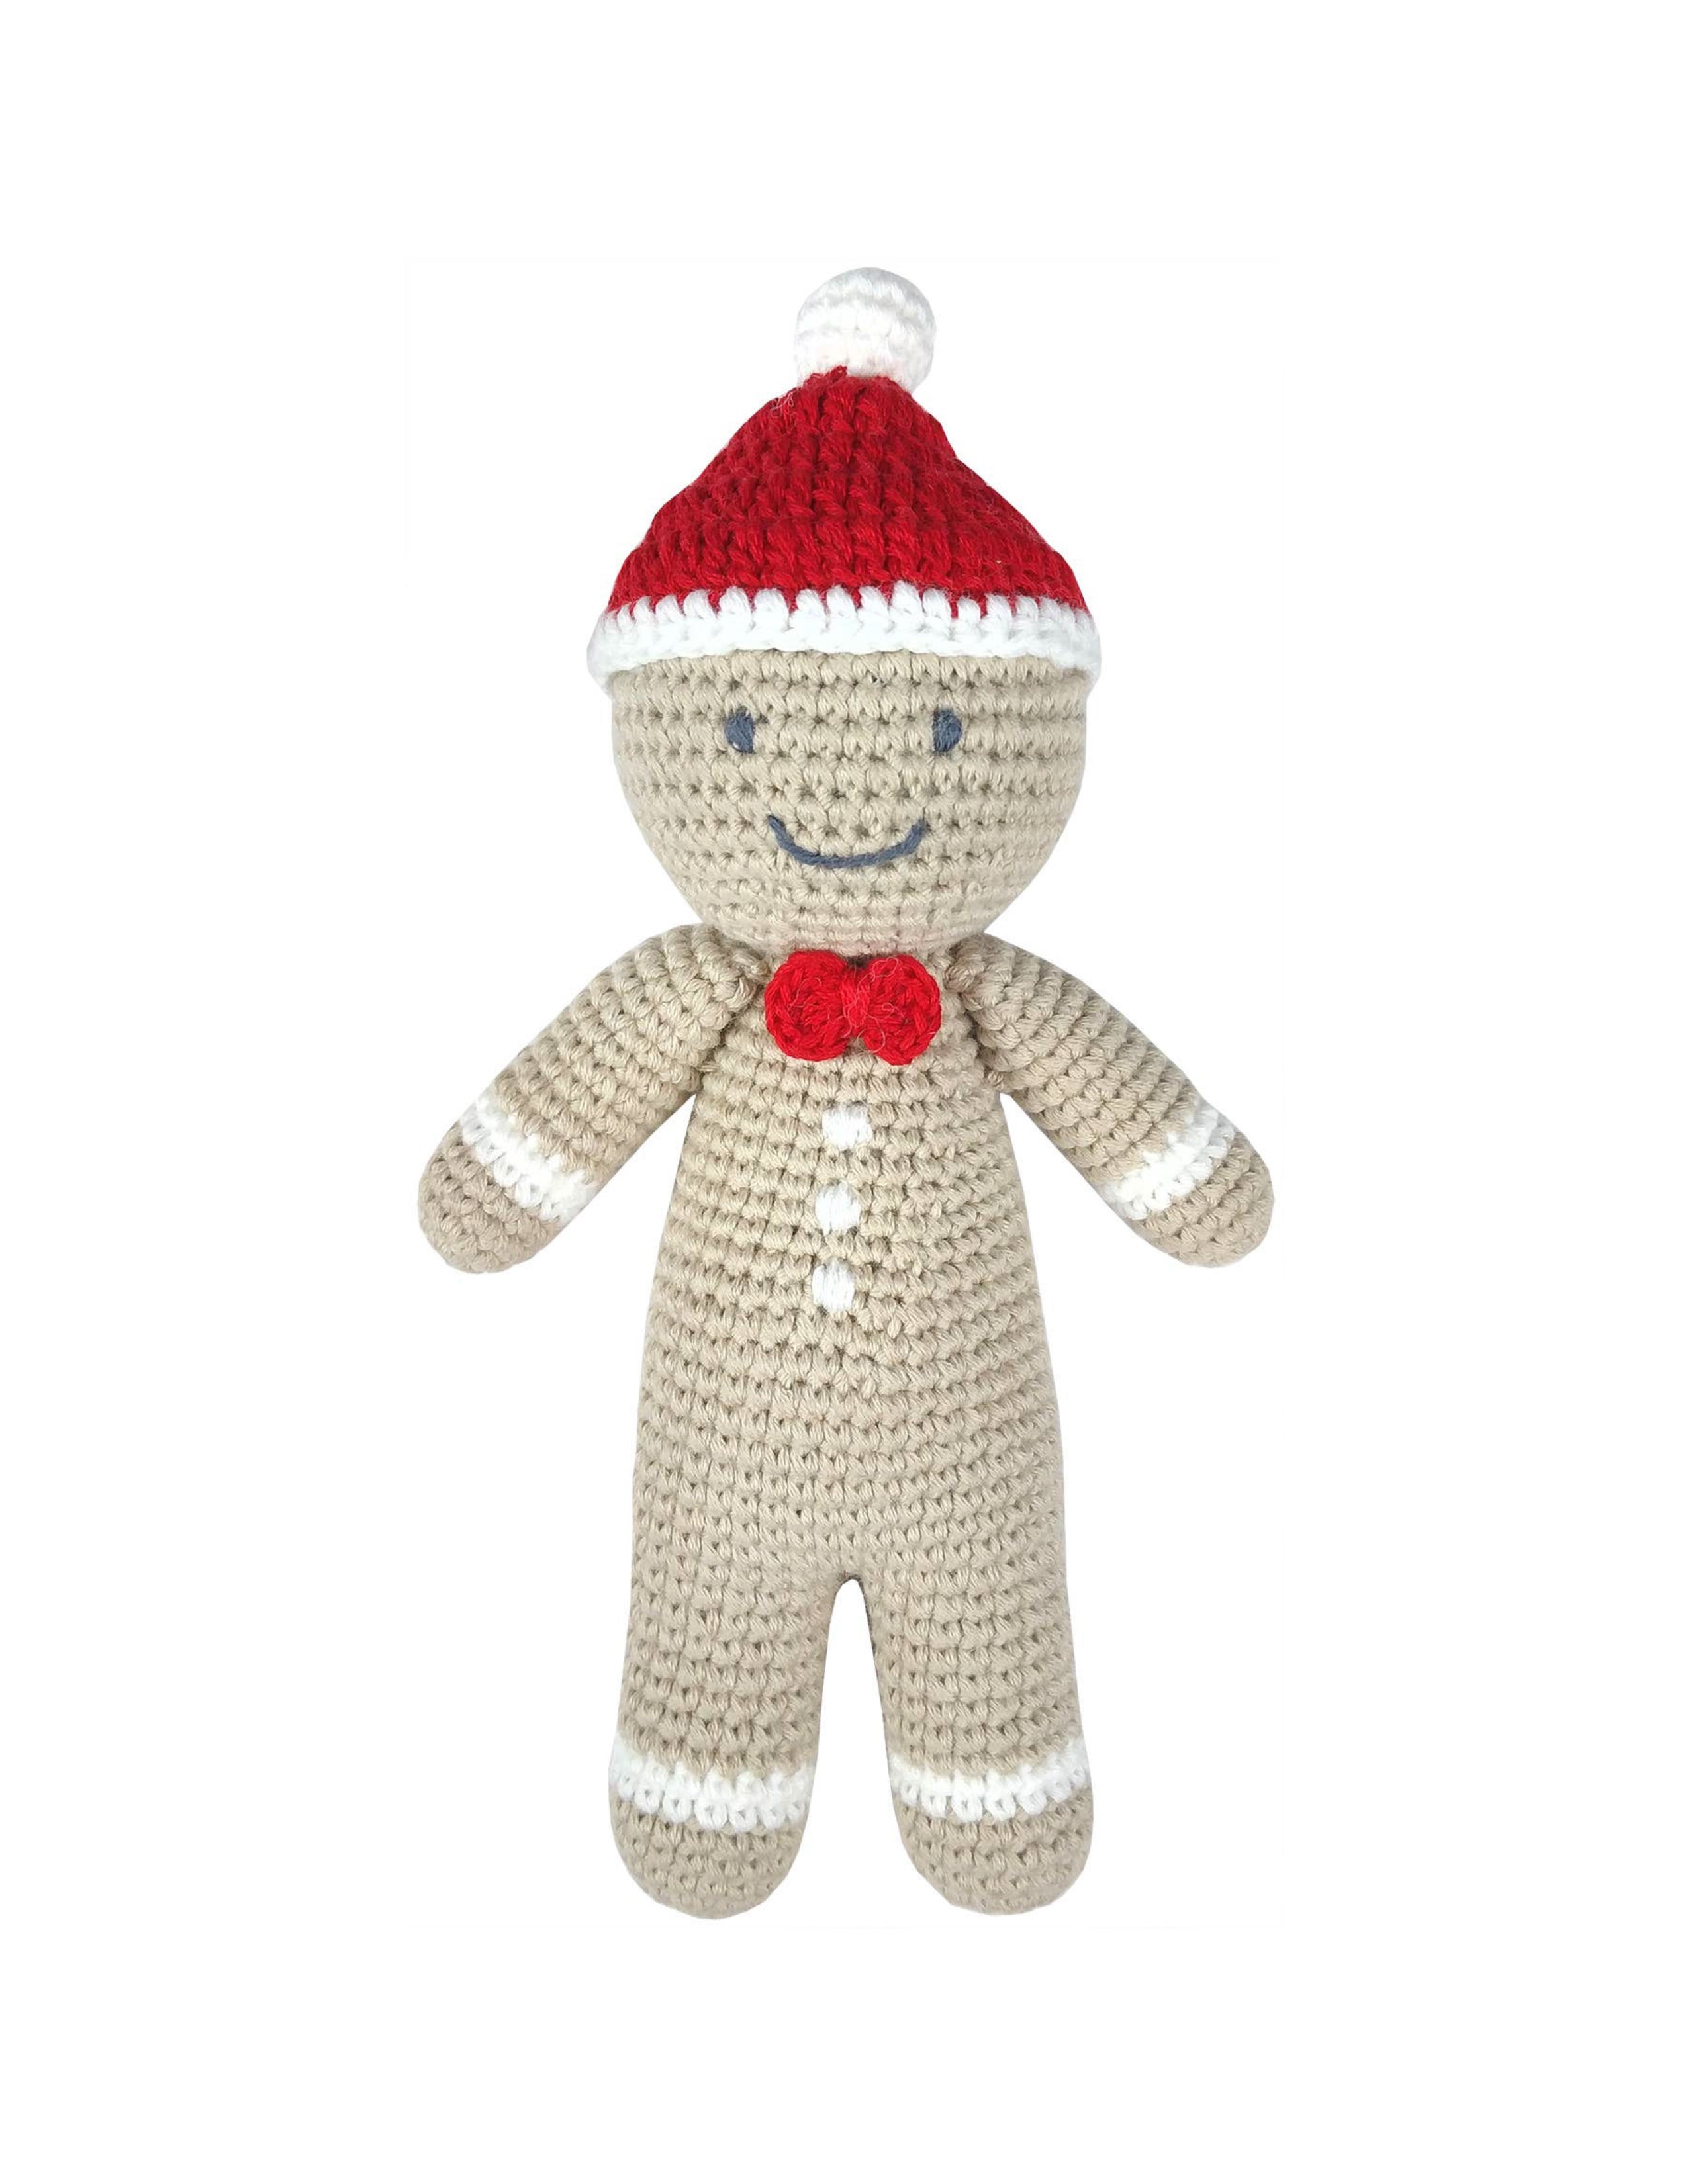 Crochet Gingerbread Man Rattle Toy